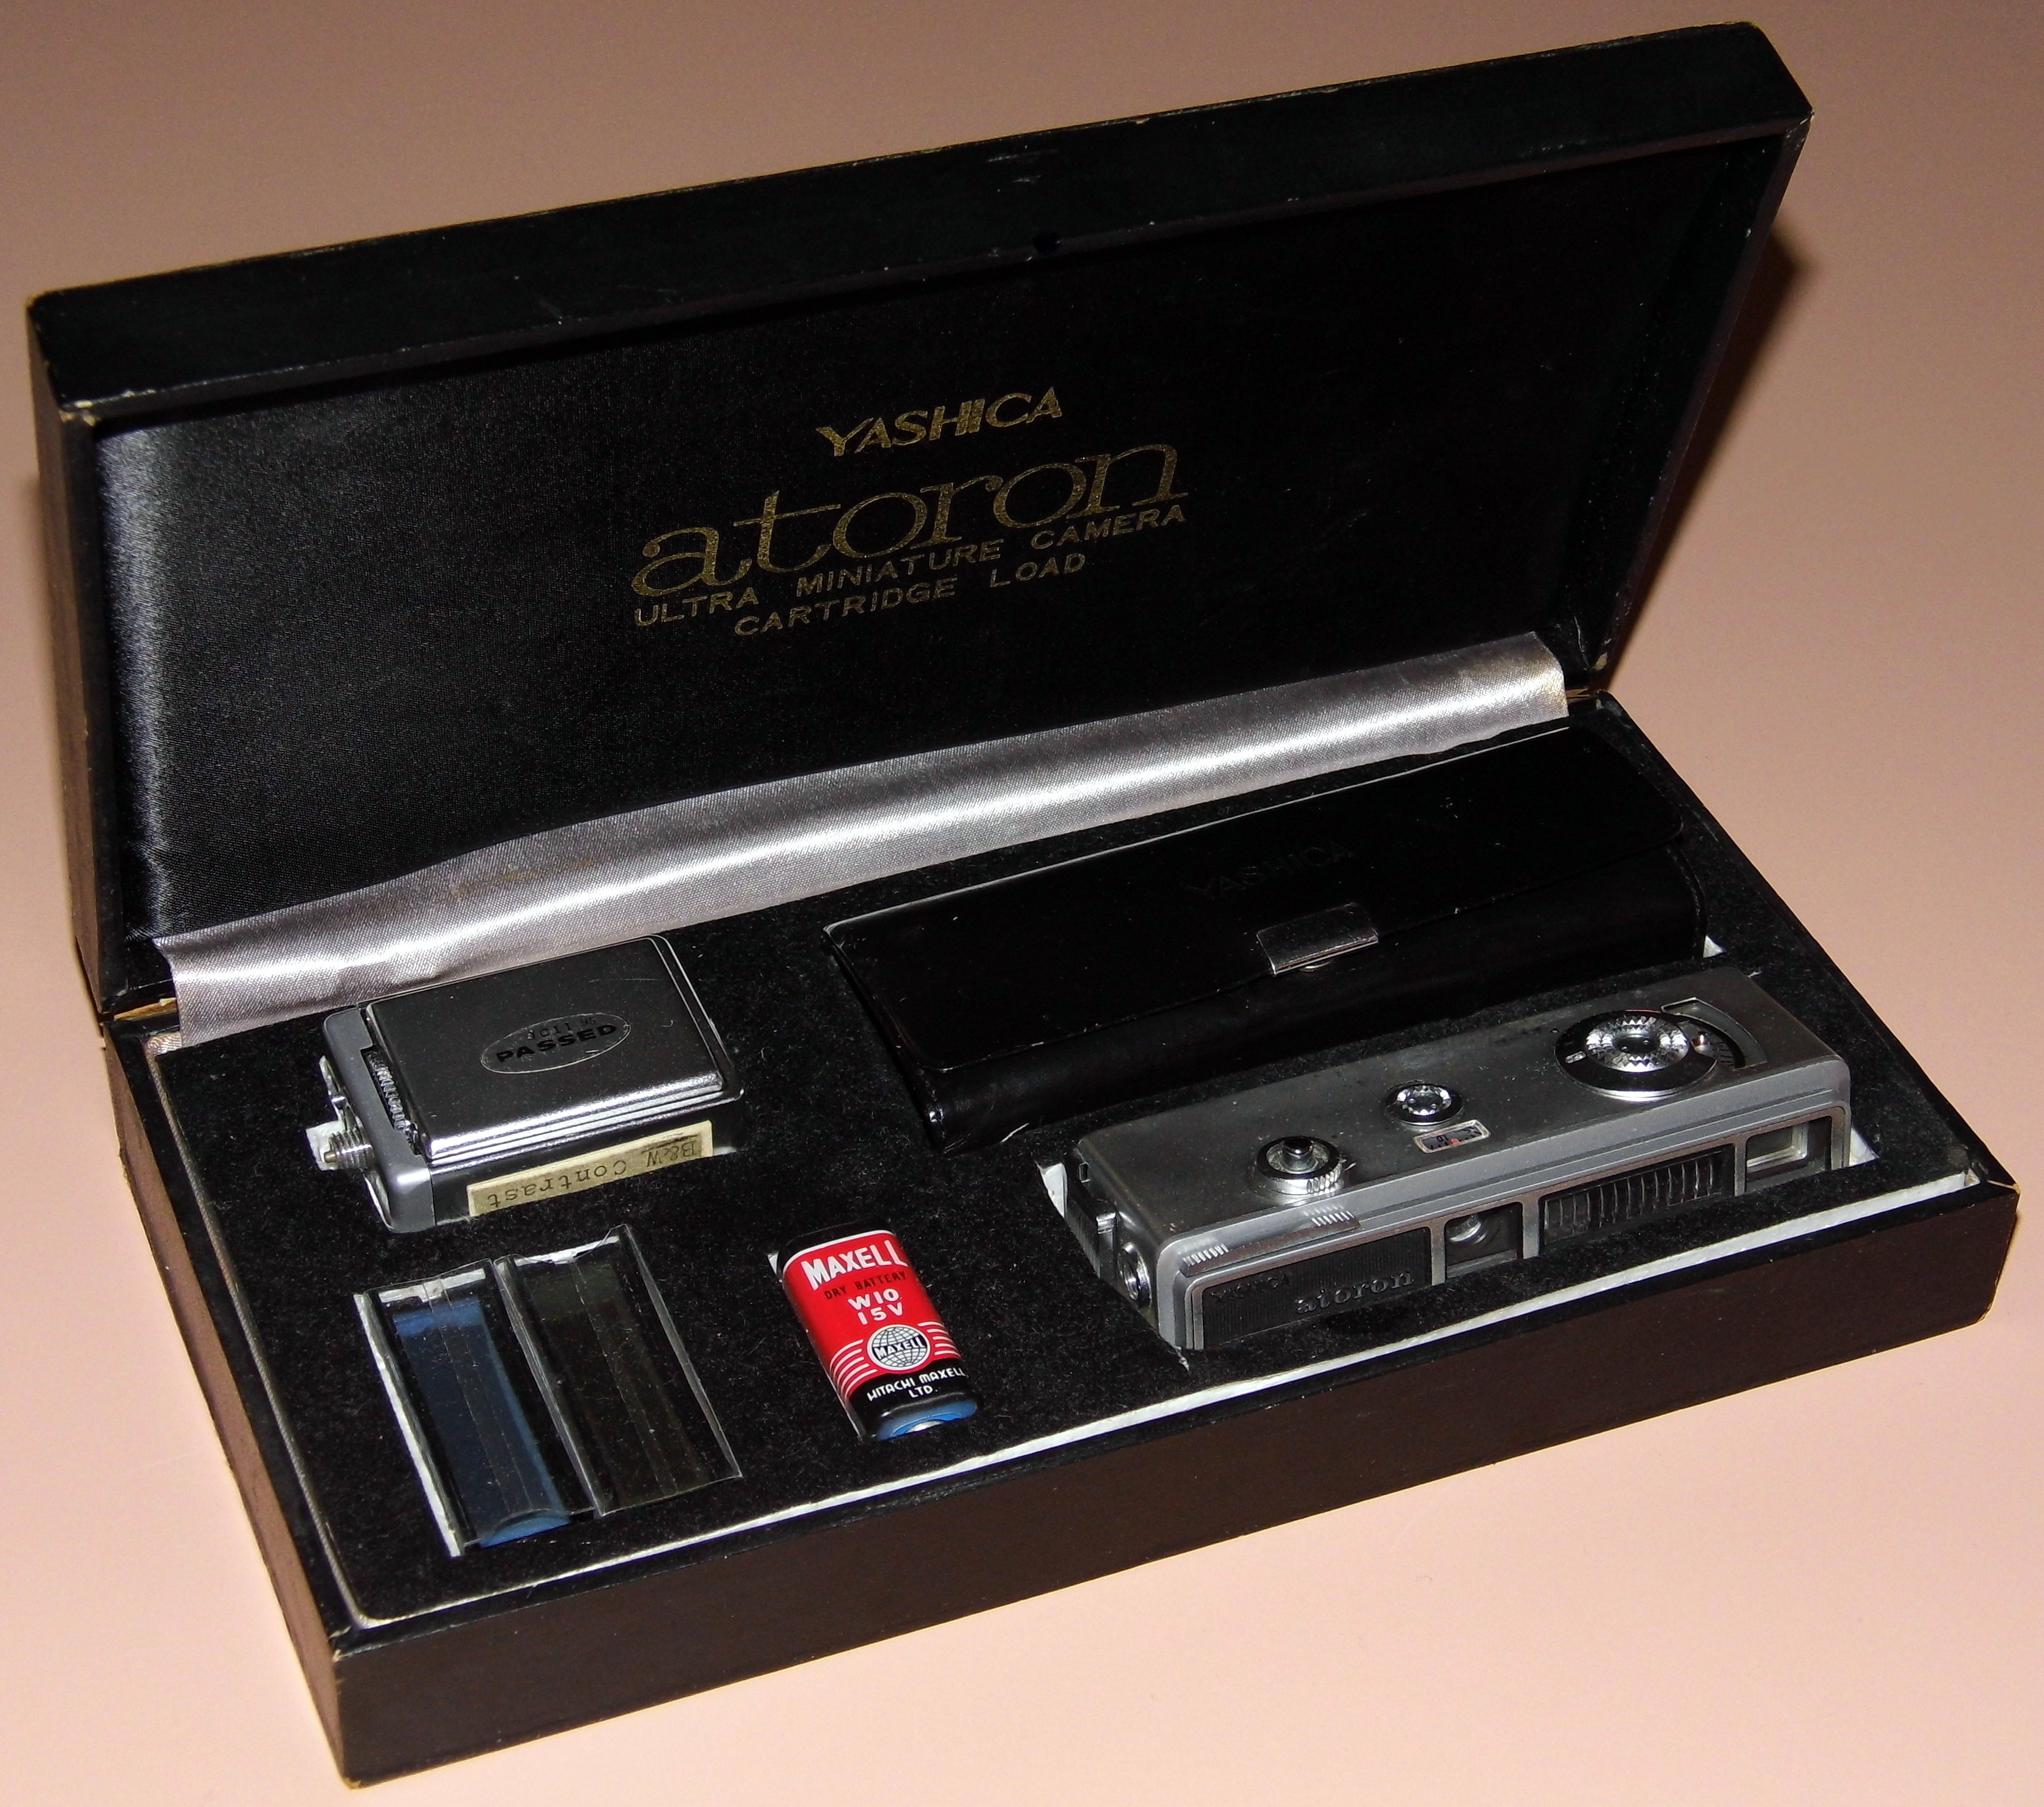 Vintage Yashica Atoron Ultra Miniature Camera, Cartridge Load, Made In Japan, Circa 1972 (15781362684)